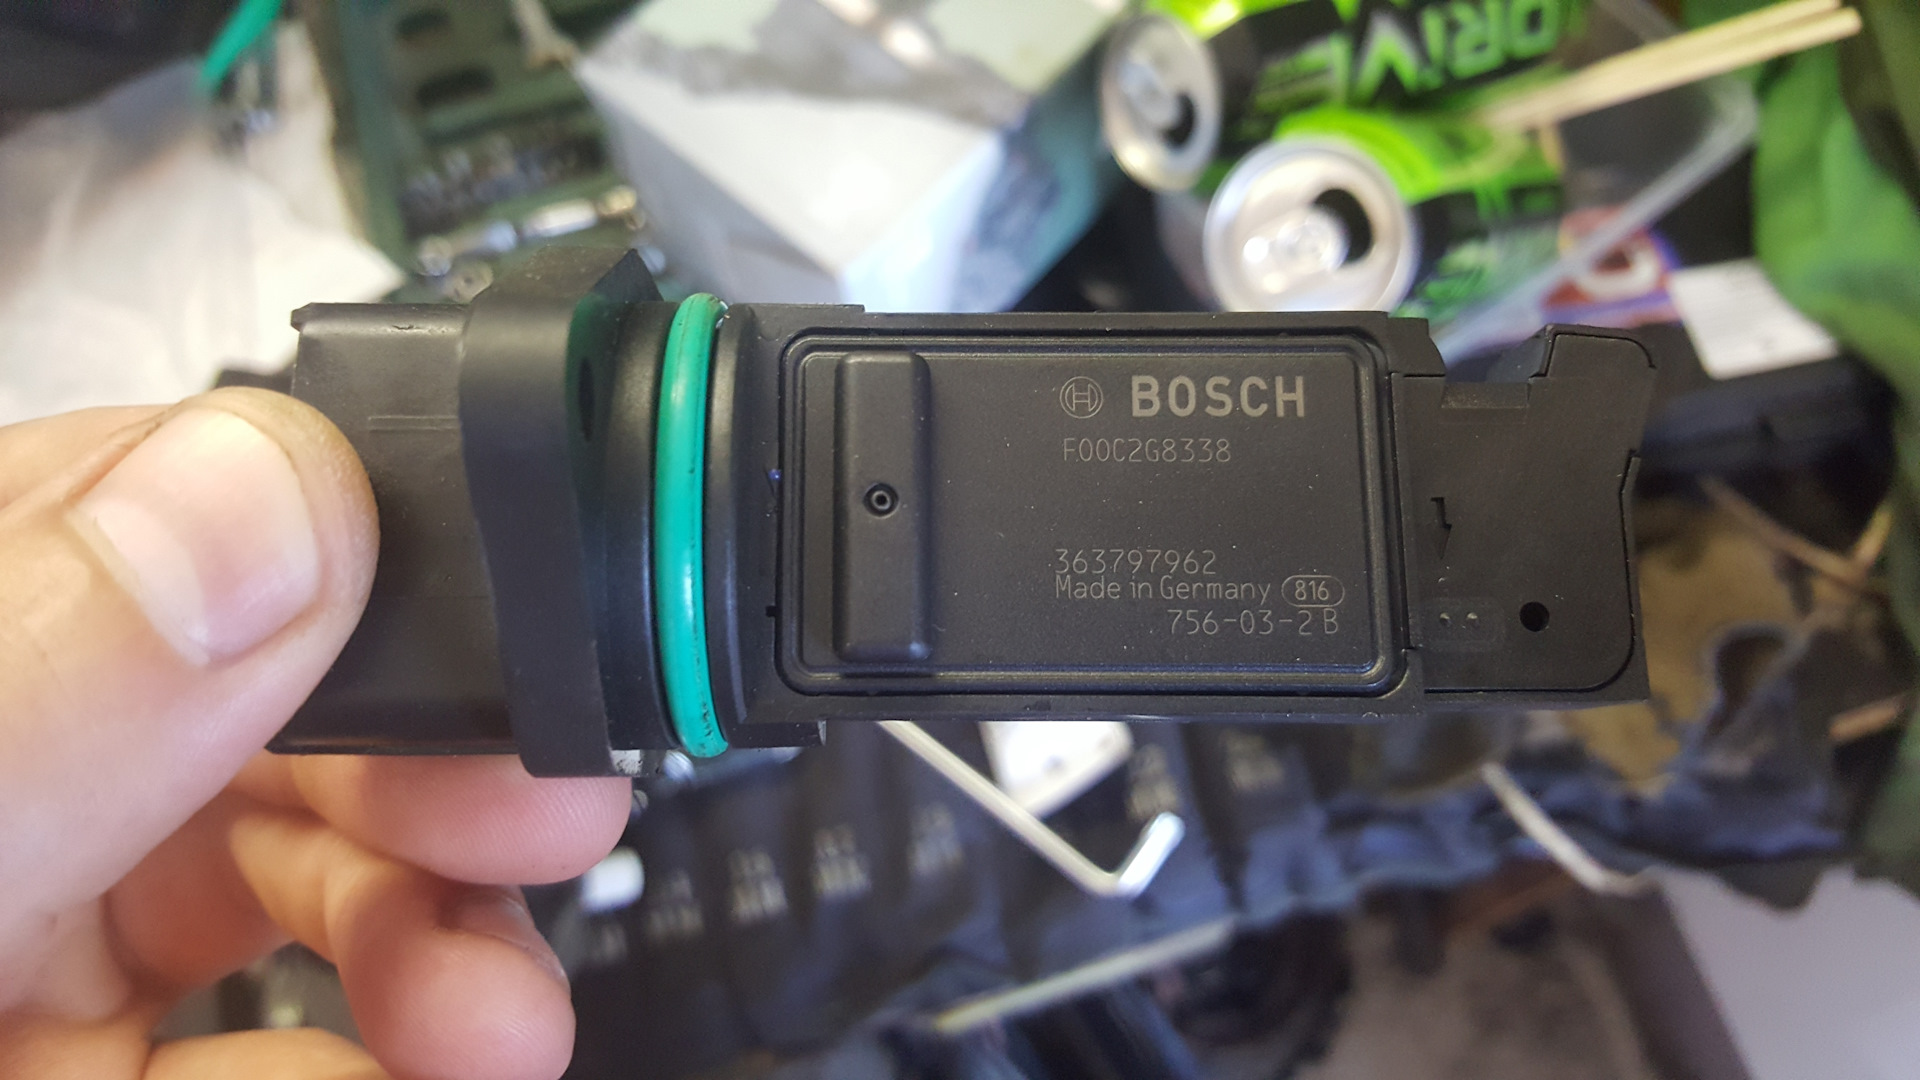 Ауди б4 дмрв. Бош 090 ДМРВ. ДМРВ Bosch 1.5.4. ДМРВ 816.